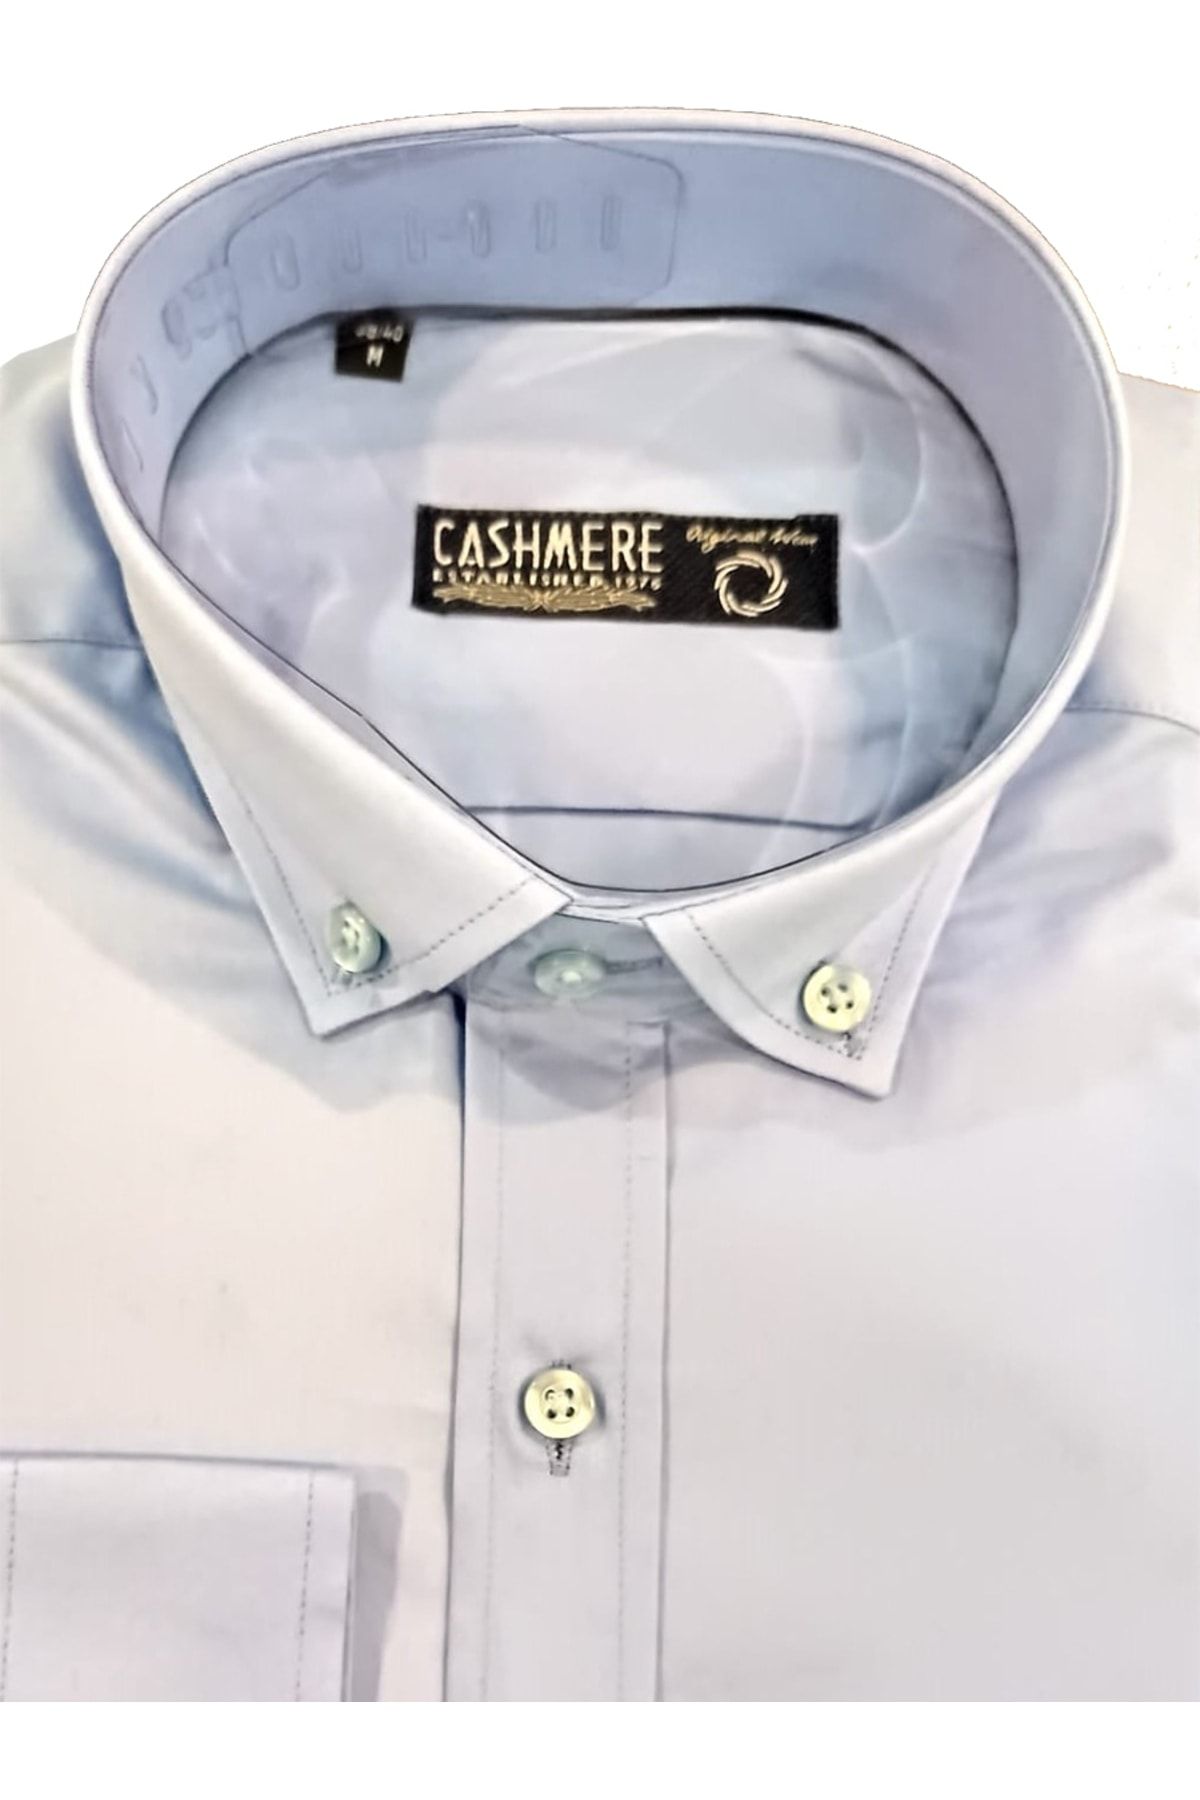 Cashmere Cotton Klasik Erkek Gömlek